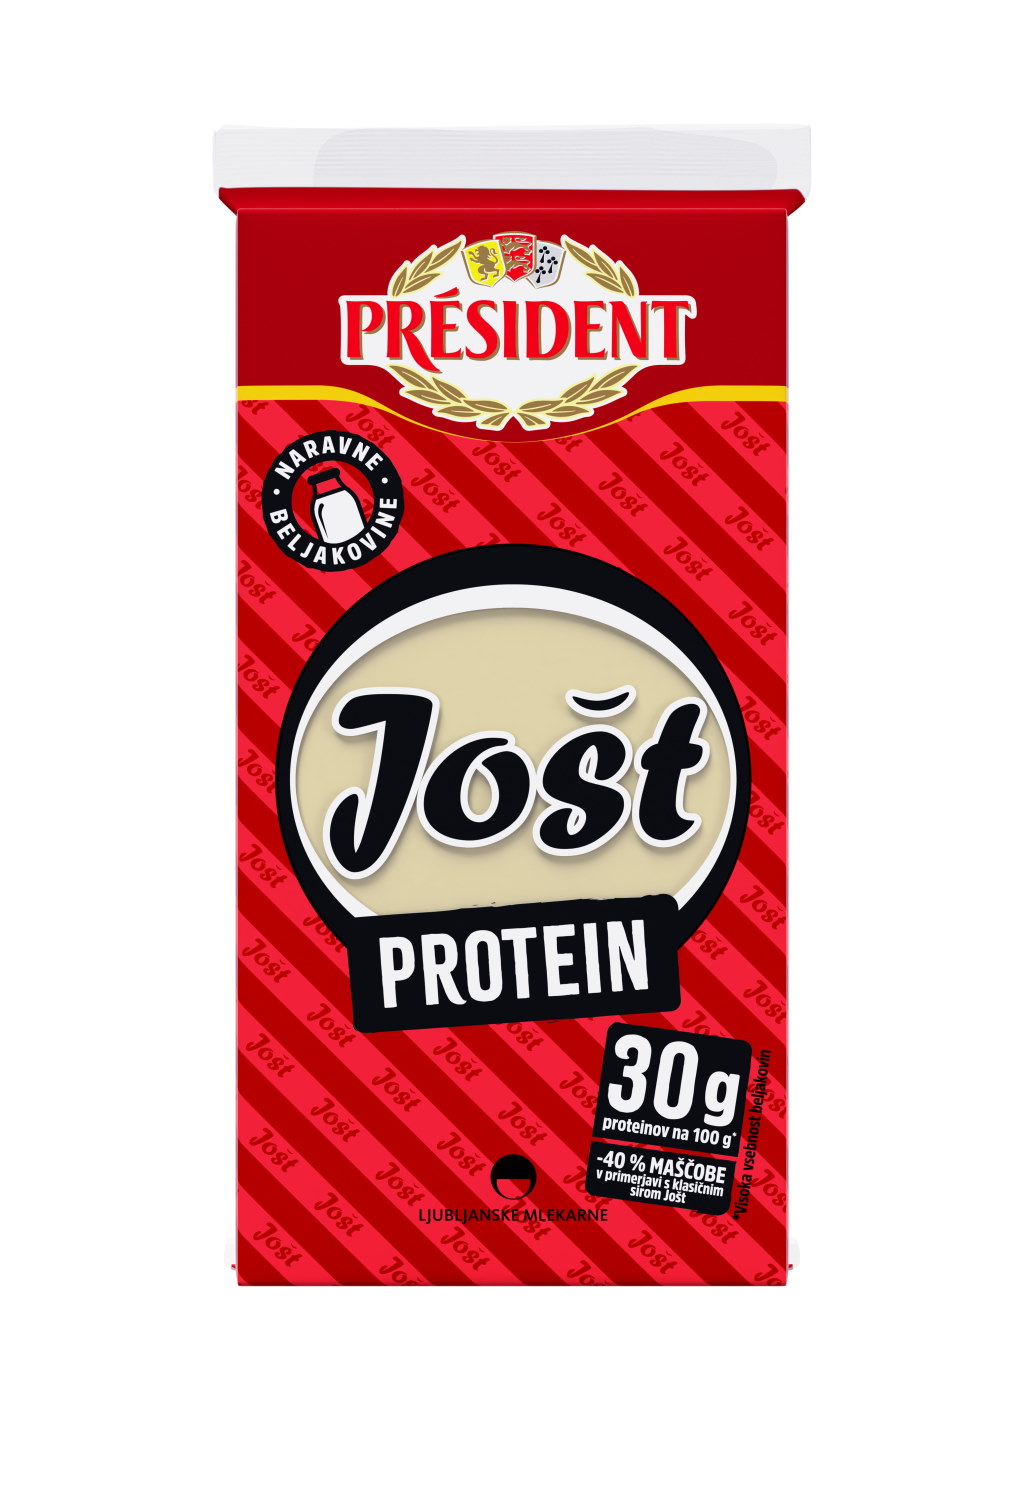 Président Jošt cheese proteins